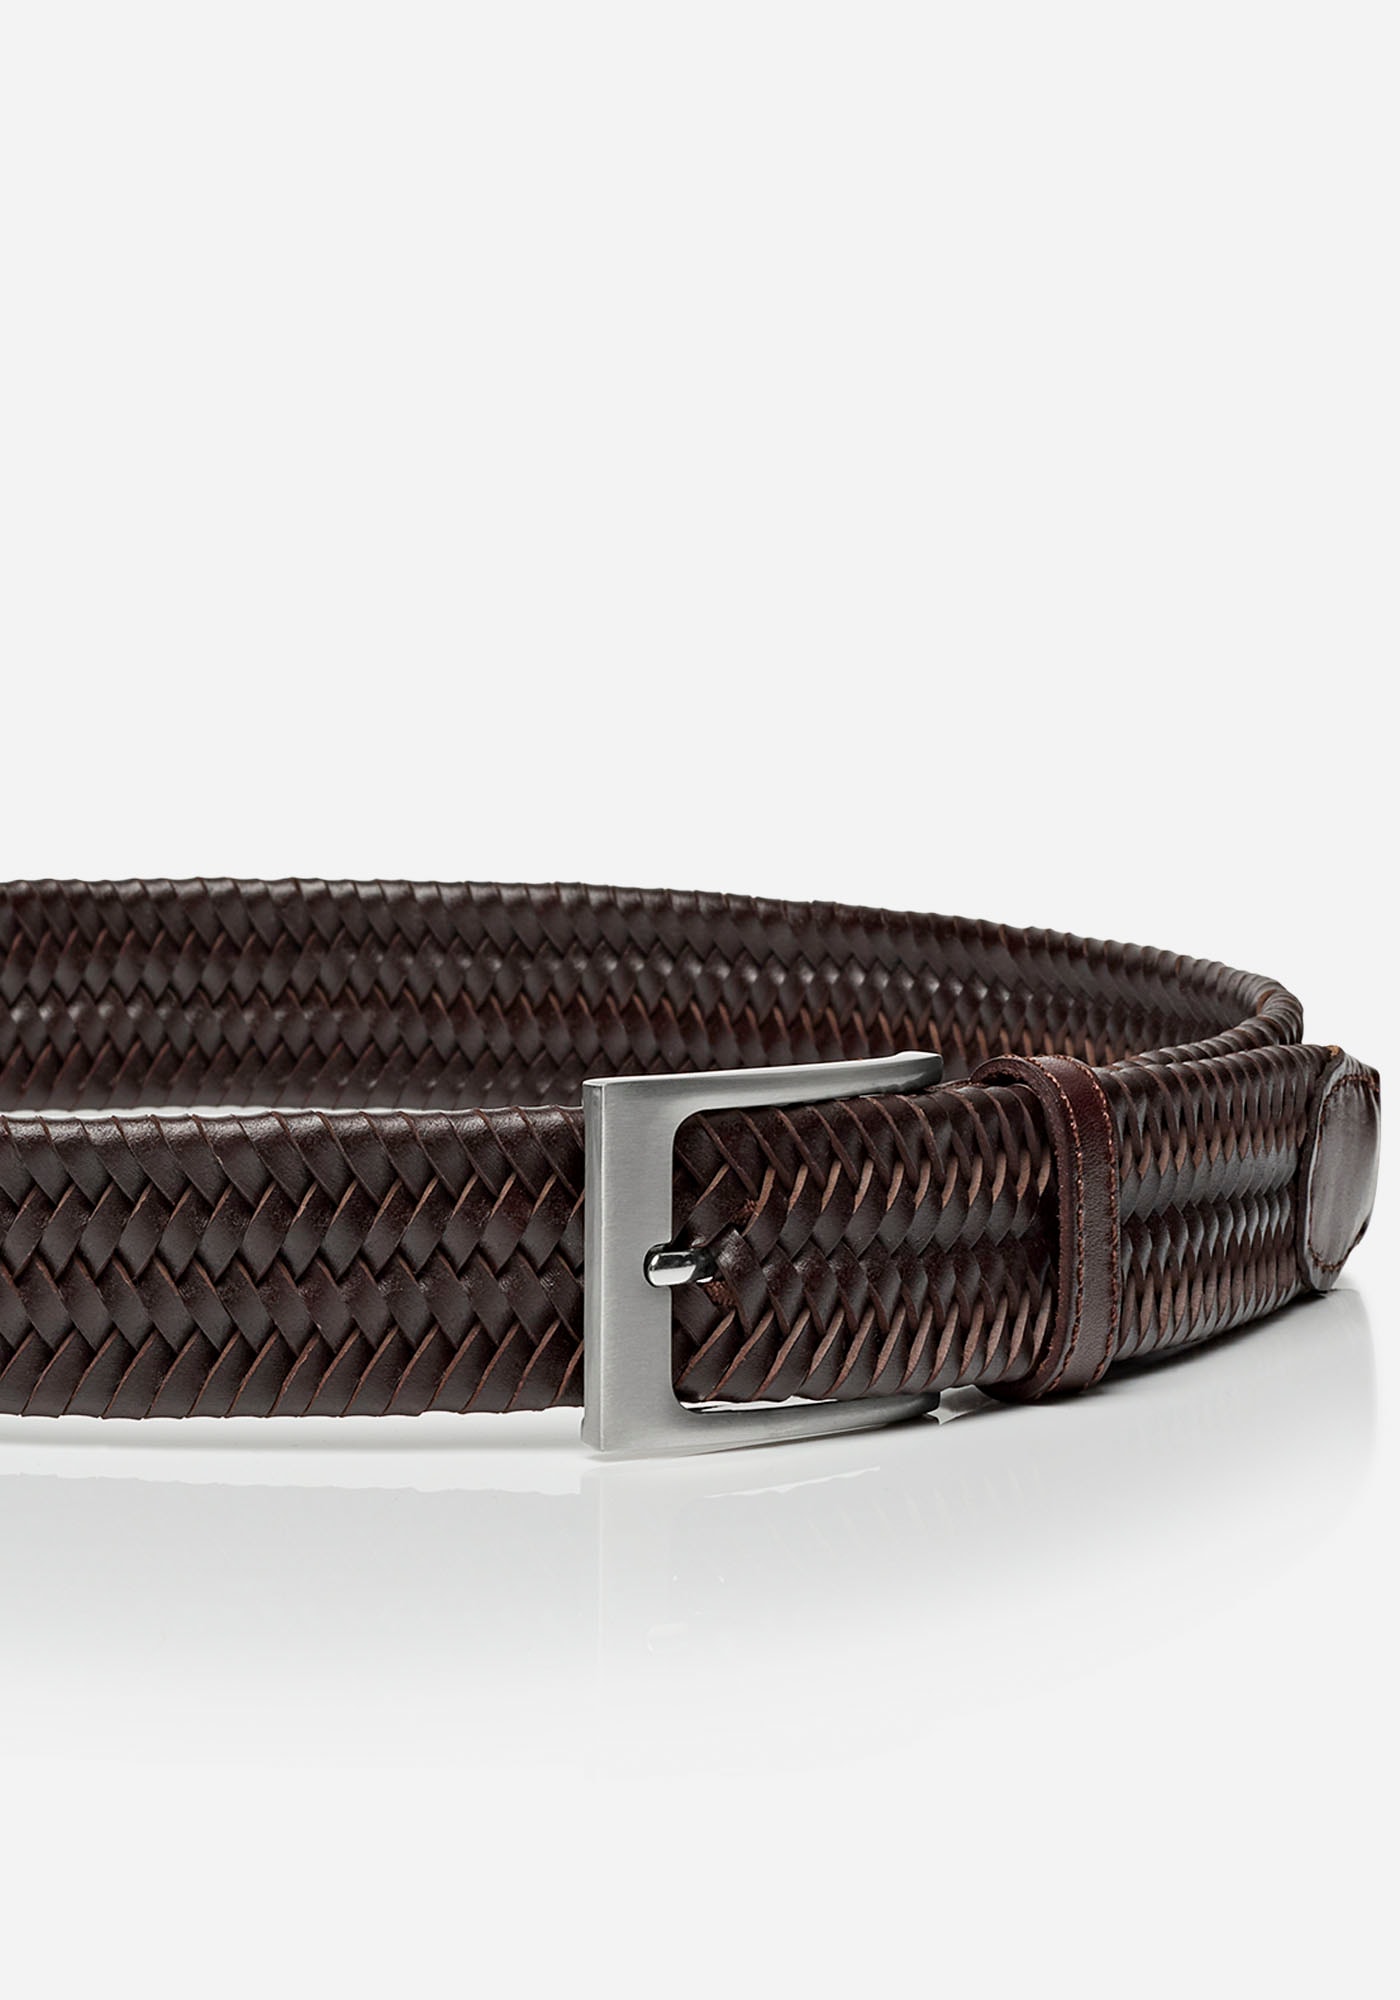 MONTI Flechtgürtel »RIO«, 3,5 cm breit, Elastisches Leder-Flechtband, Casual-Business-Sportiv